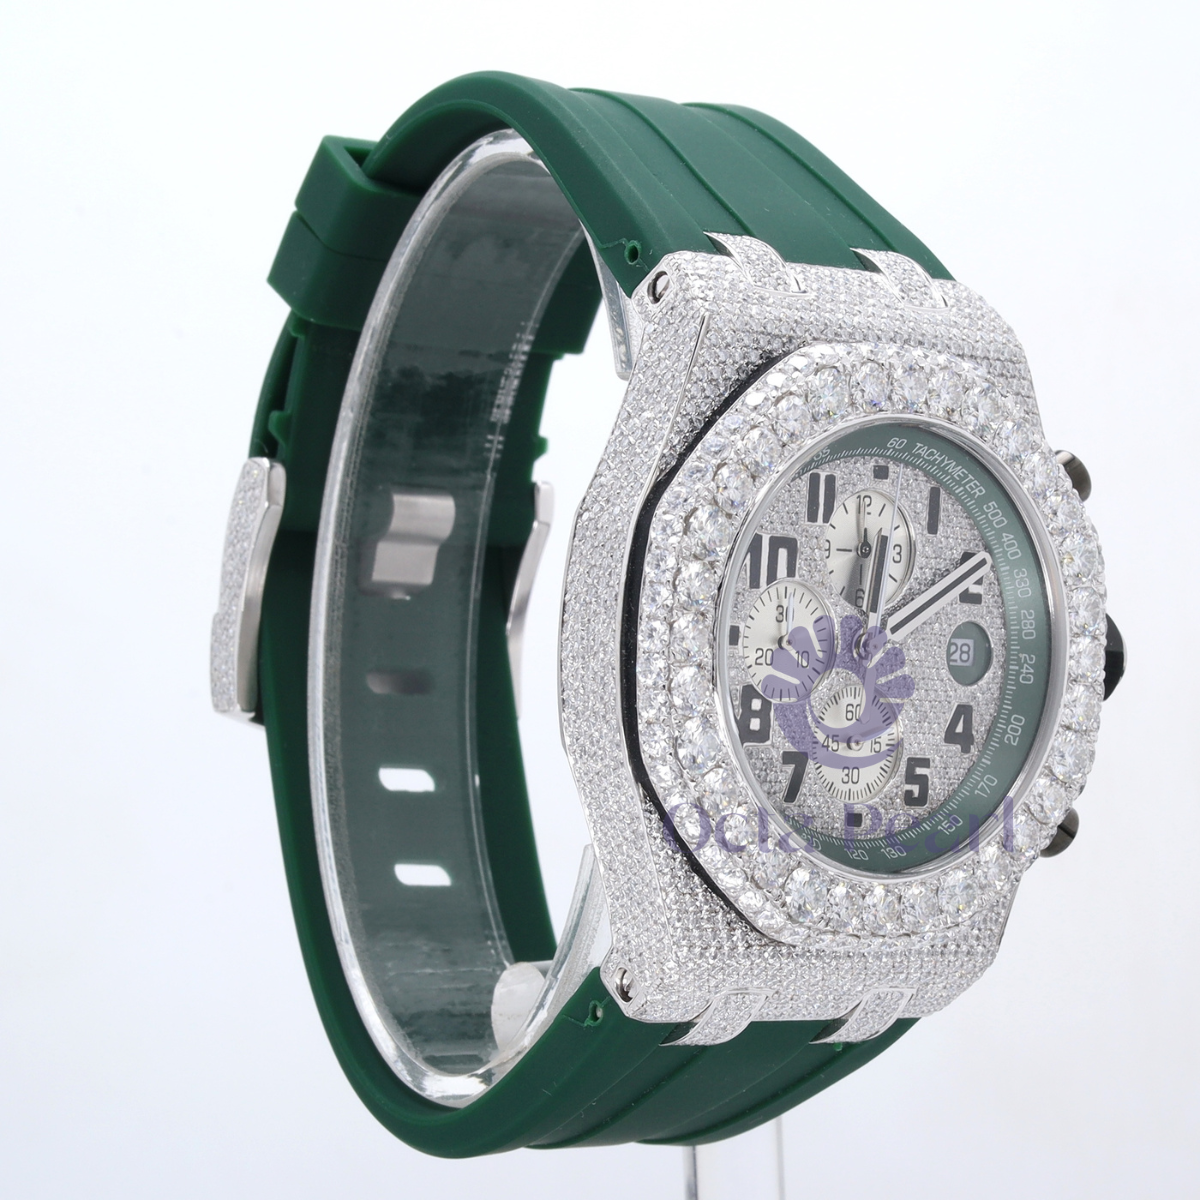 Luxury Round Moissanite Green Strap Band Watch For Men